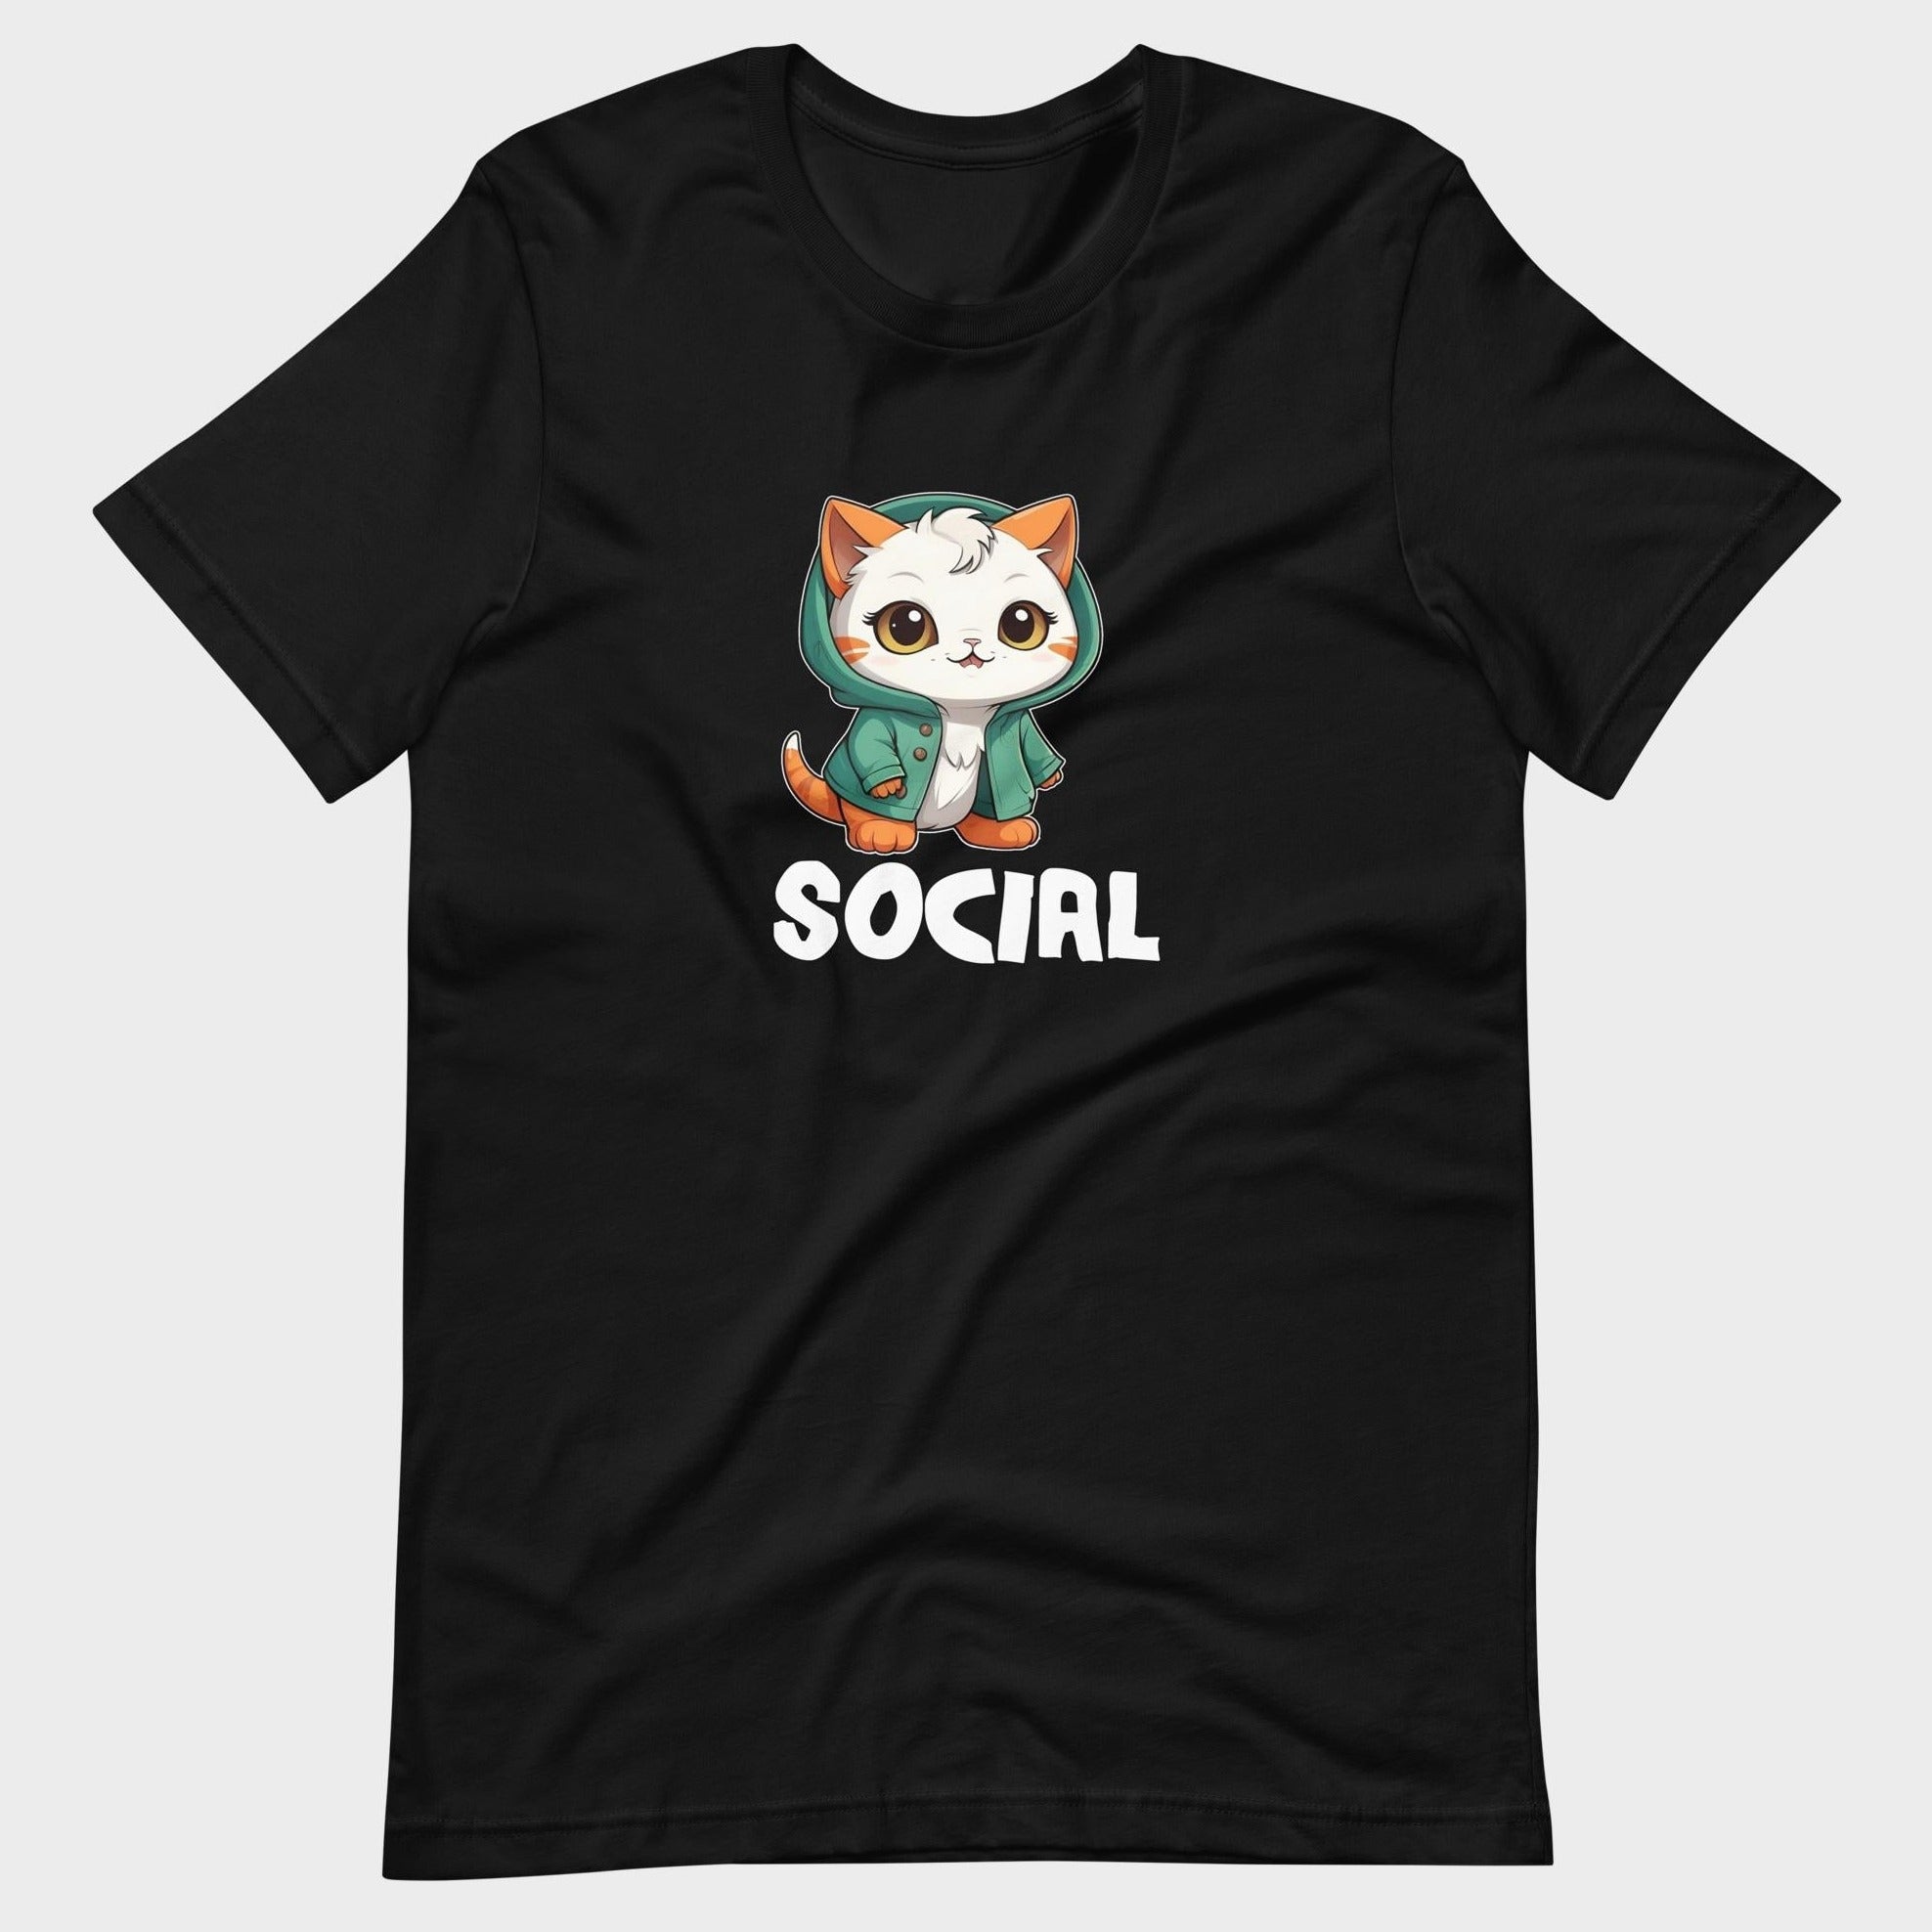 Social - T-Shirt